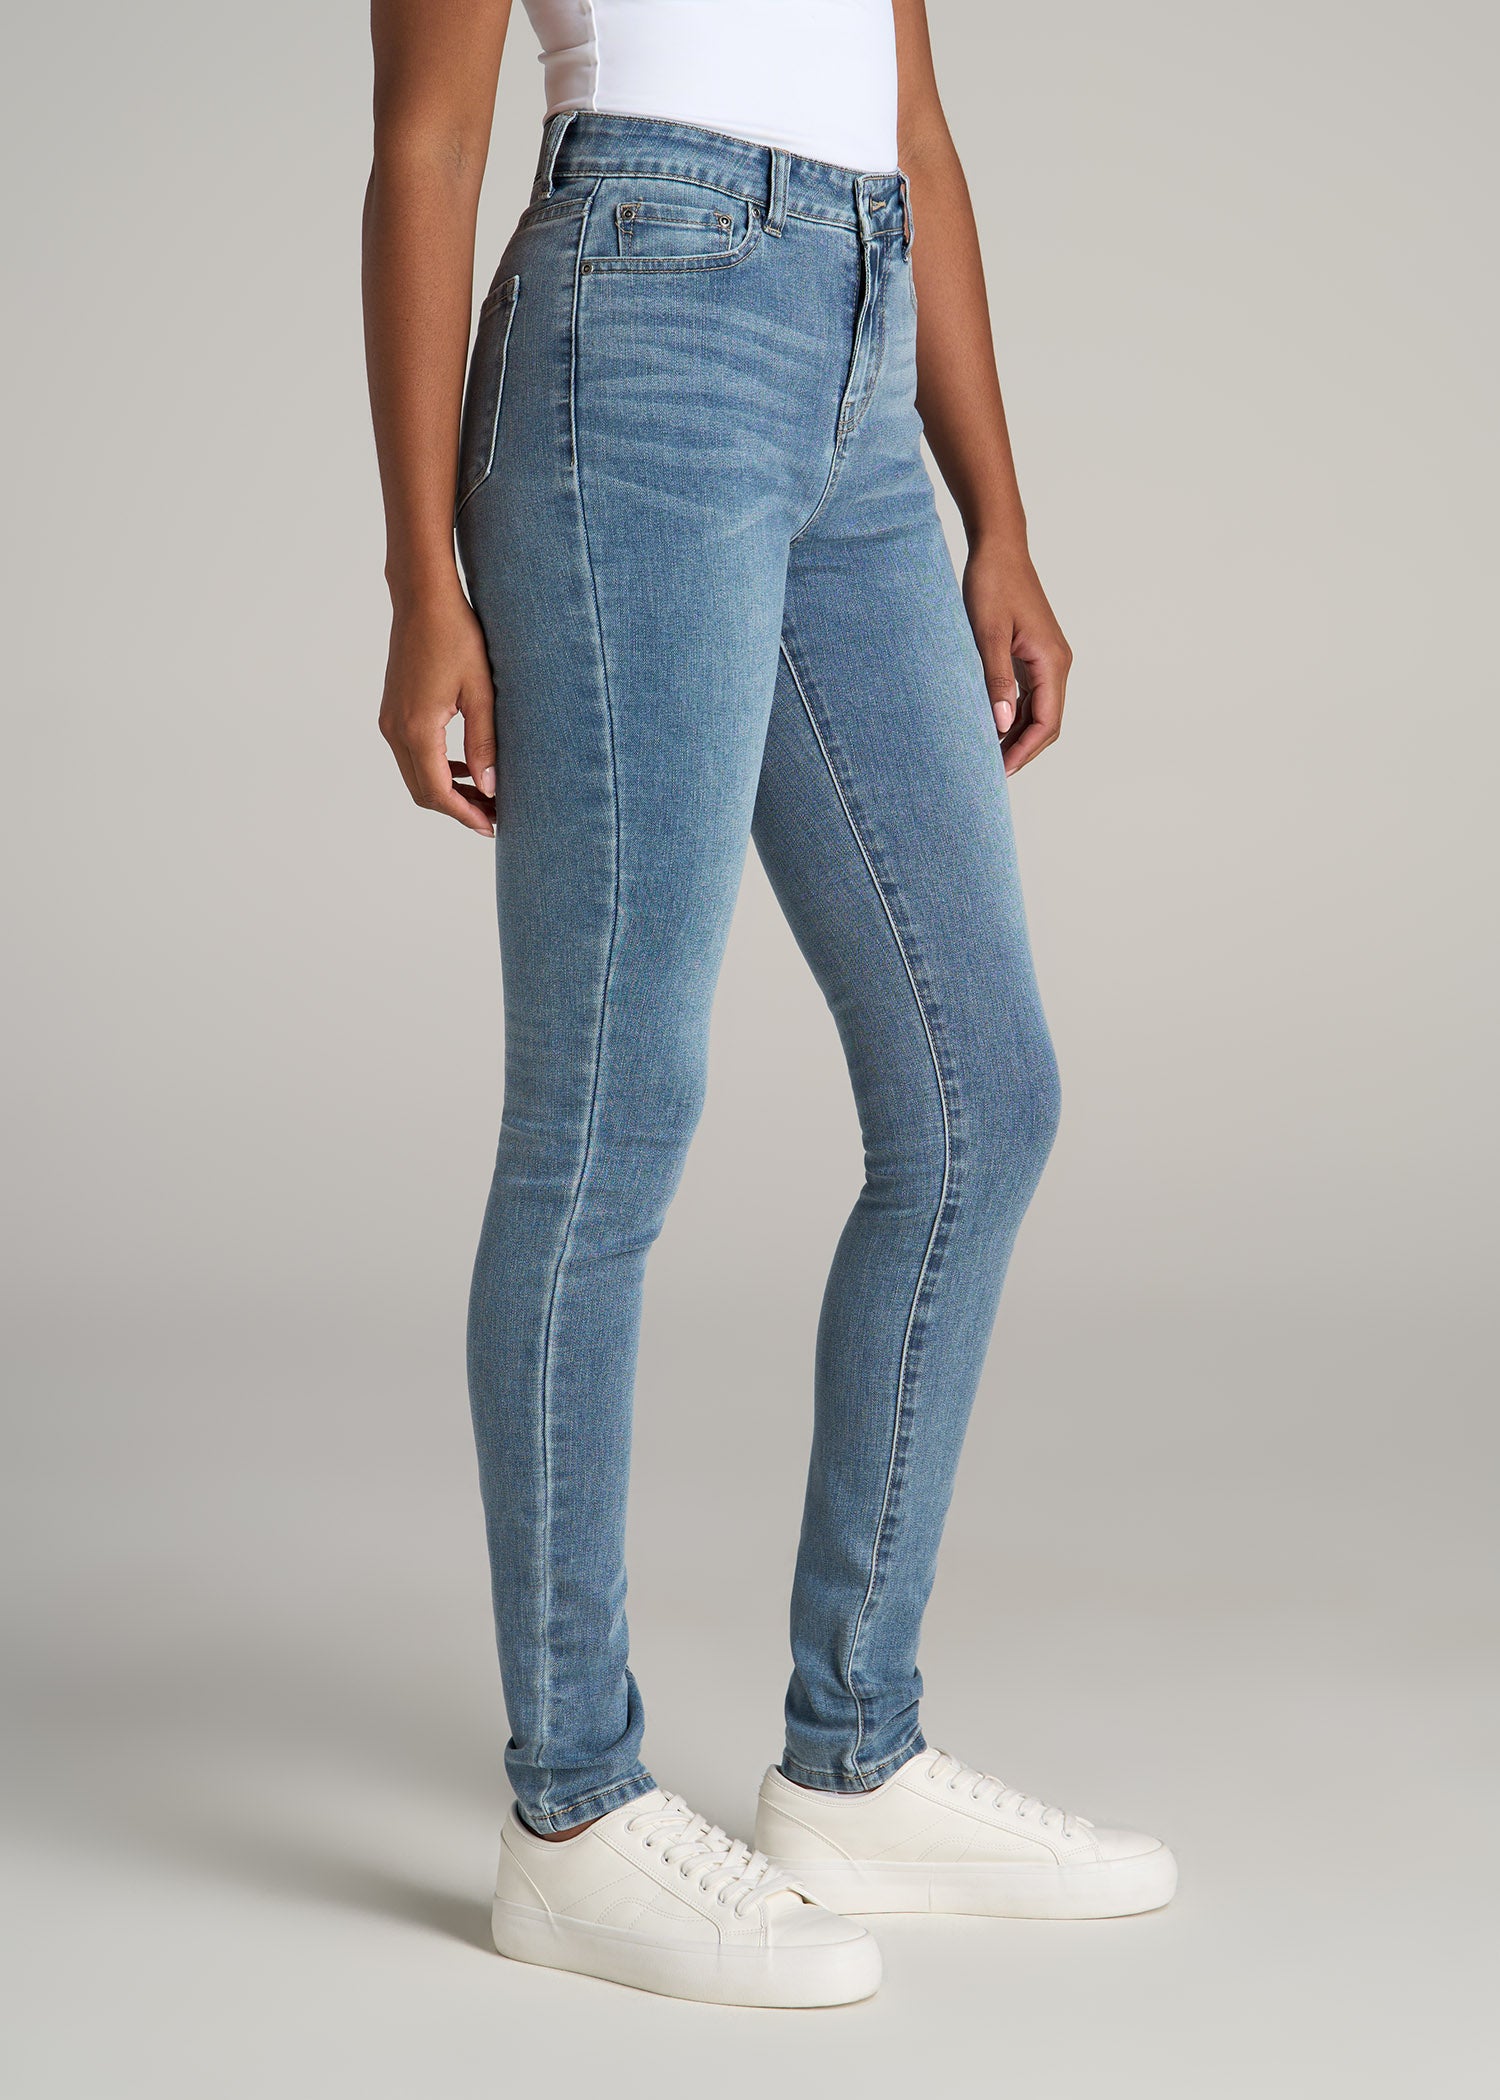 Women's BeanFlex® Jeans, High-Rise Slim-Leg Ankle | Jeans at L.L.Bean